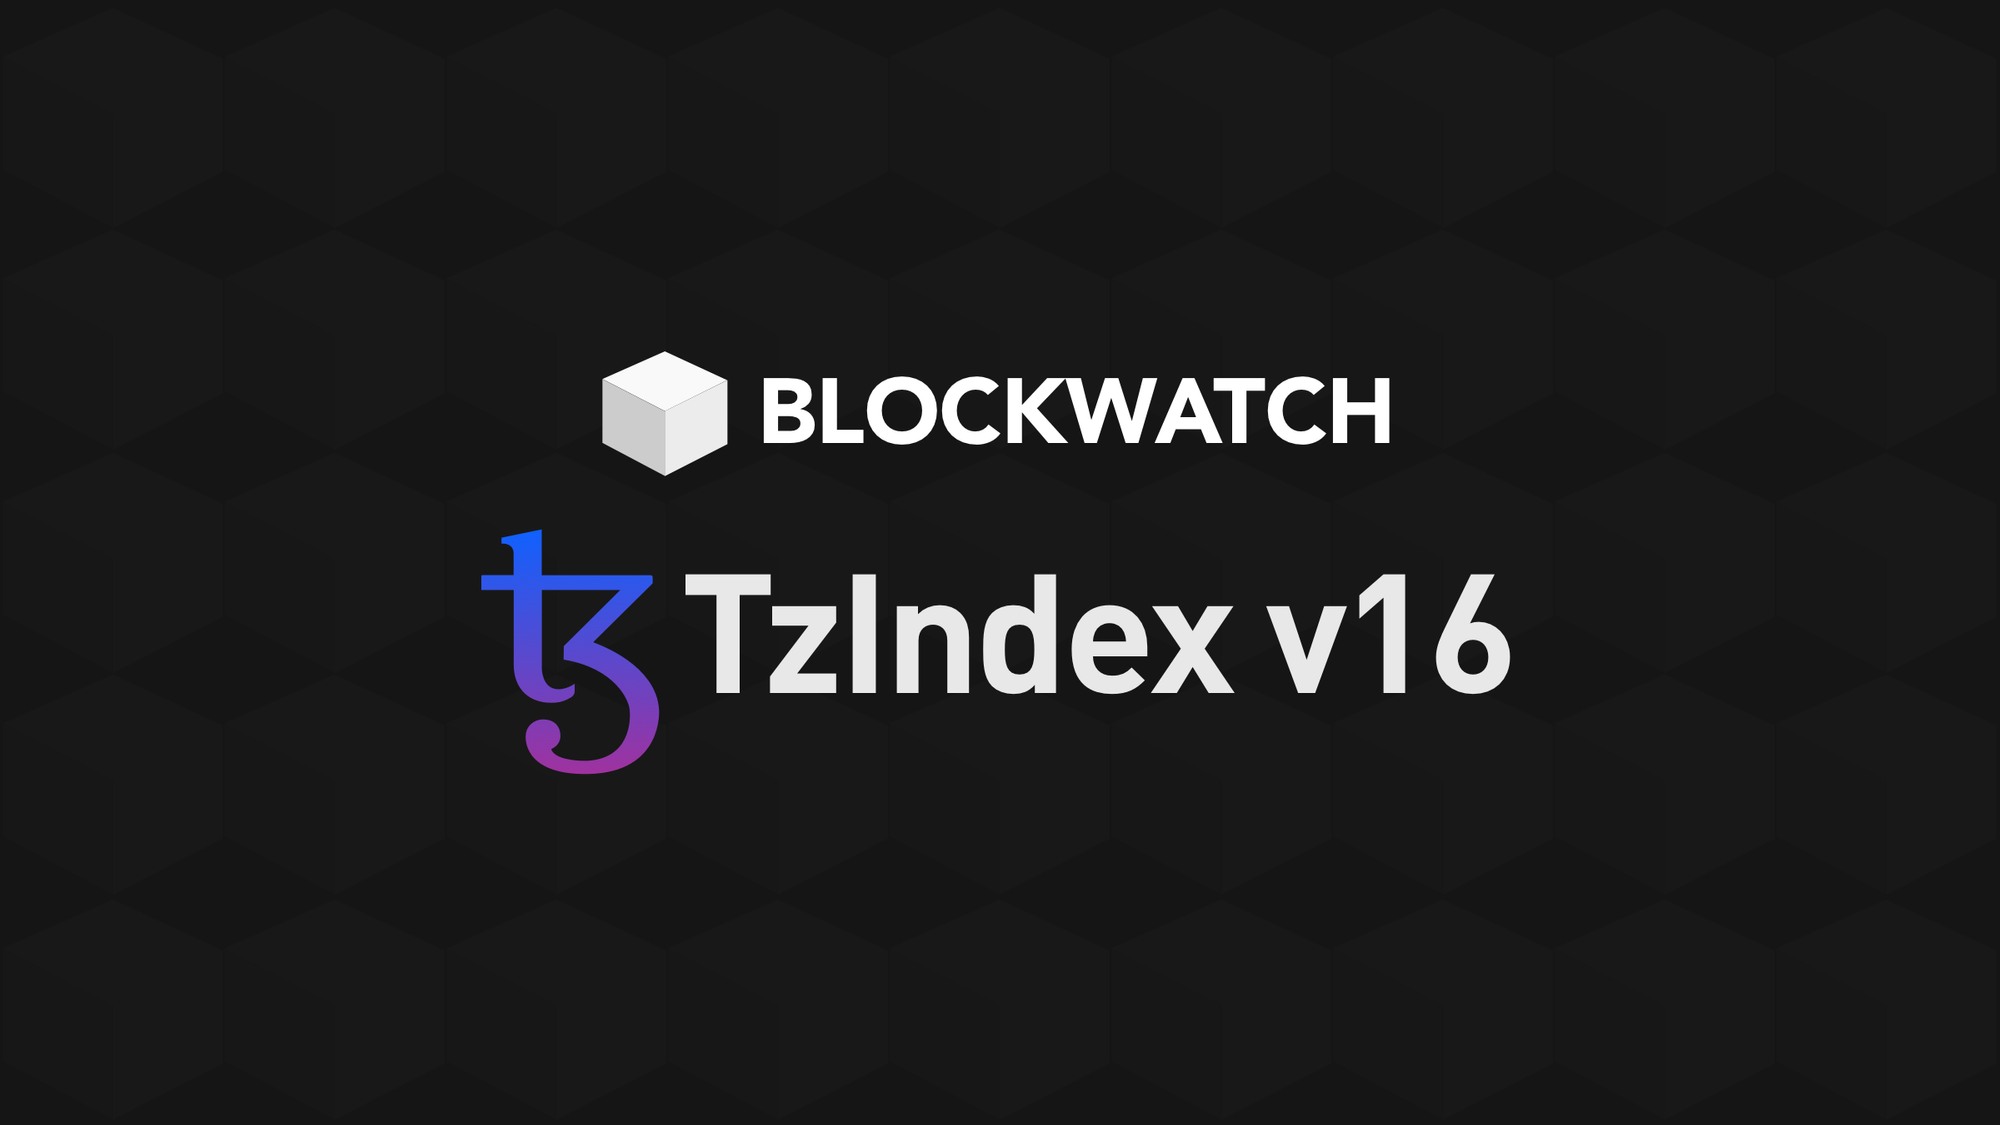 Announcing Blockwatch TzIndex v16